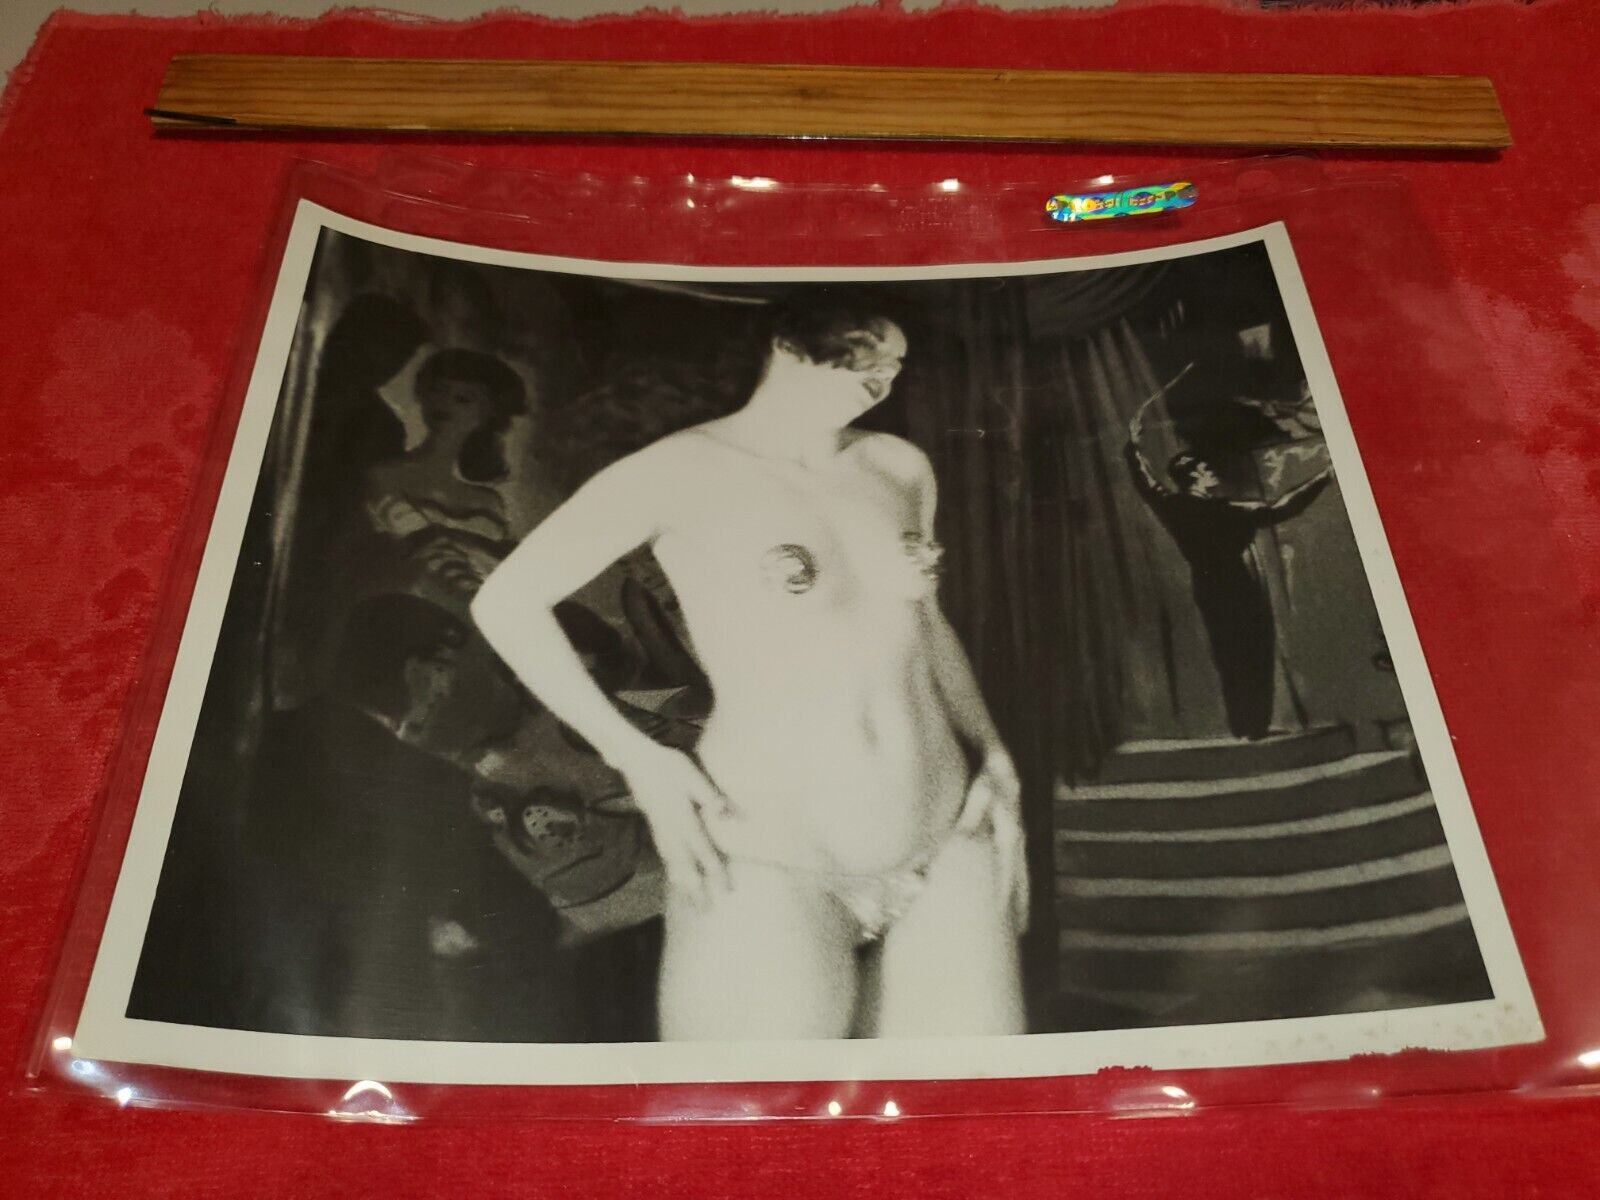 VINTAGE 1950s BURLESQUE 8 X 10 PHOTO OF DANCER CAROLE JAYNE AKA THE SPIDER GIRL